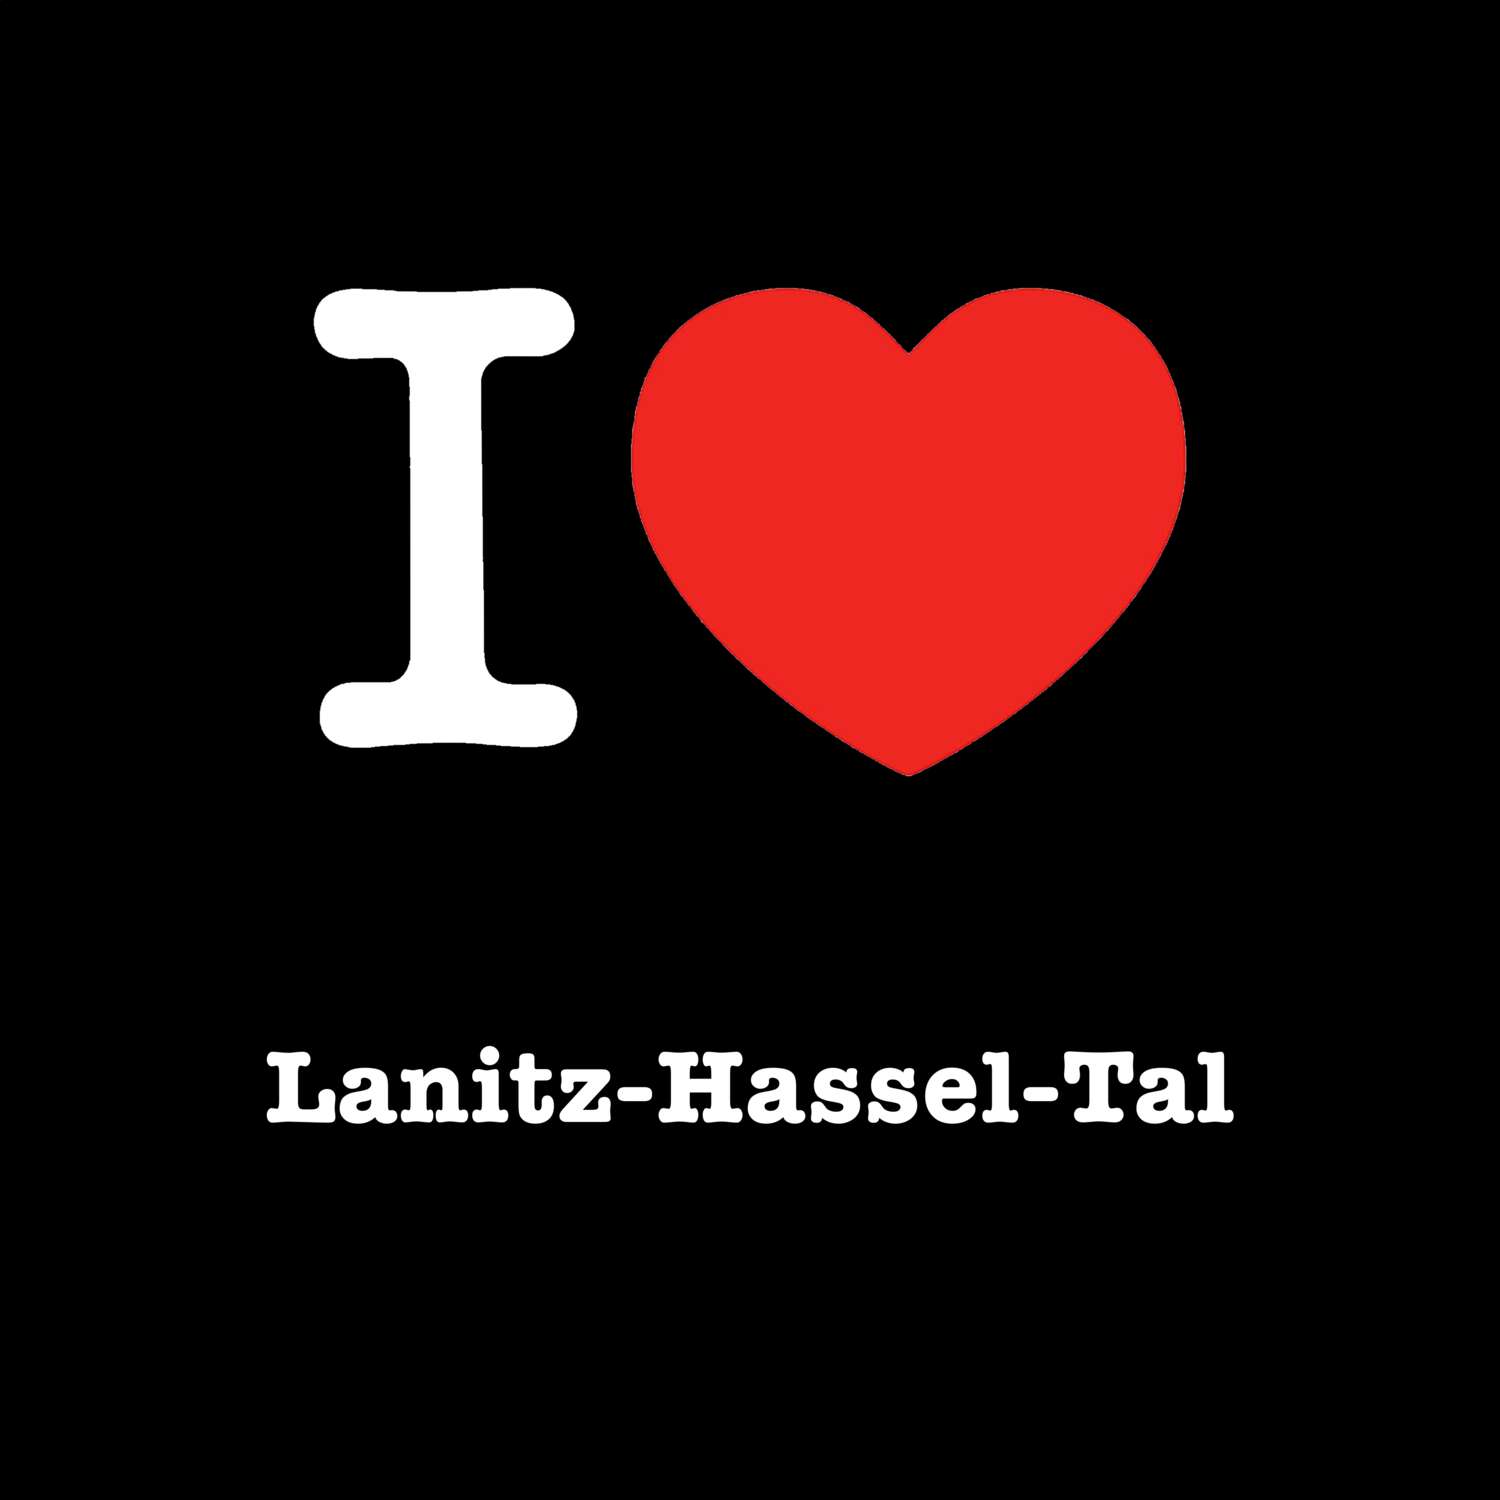 Lanitz-Hassel-Tal T-Shirt »I love«